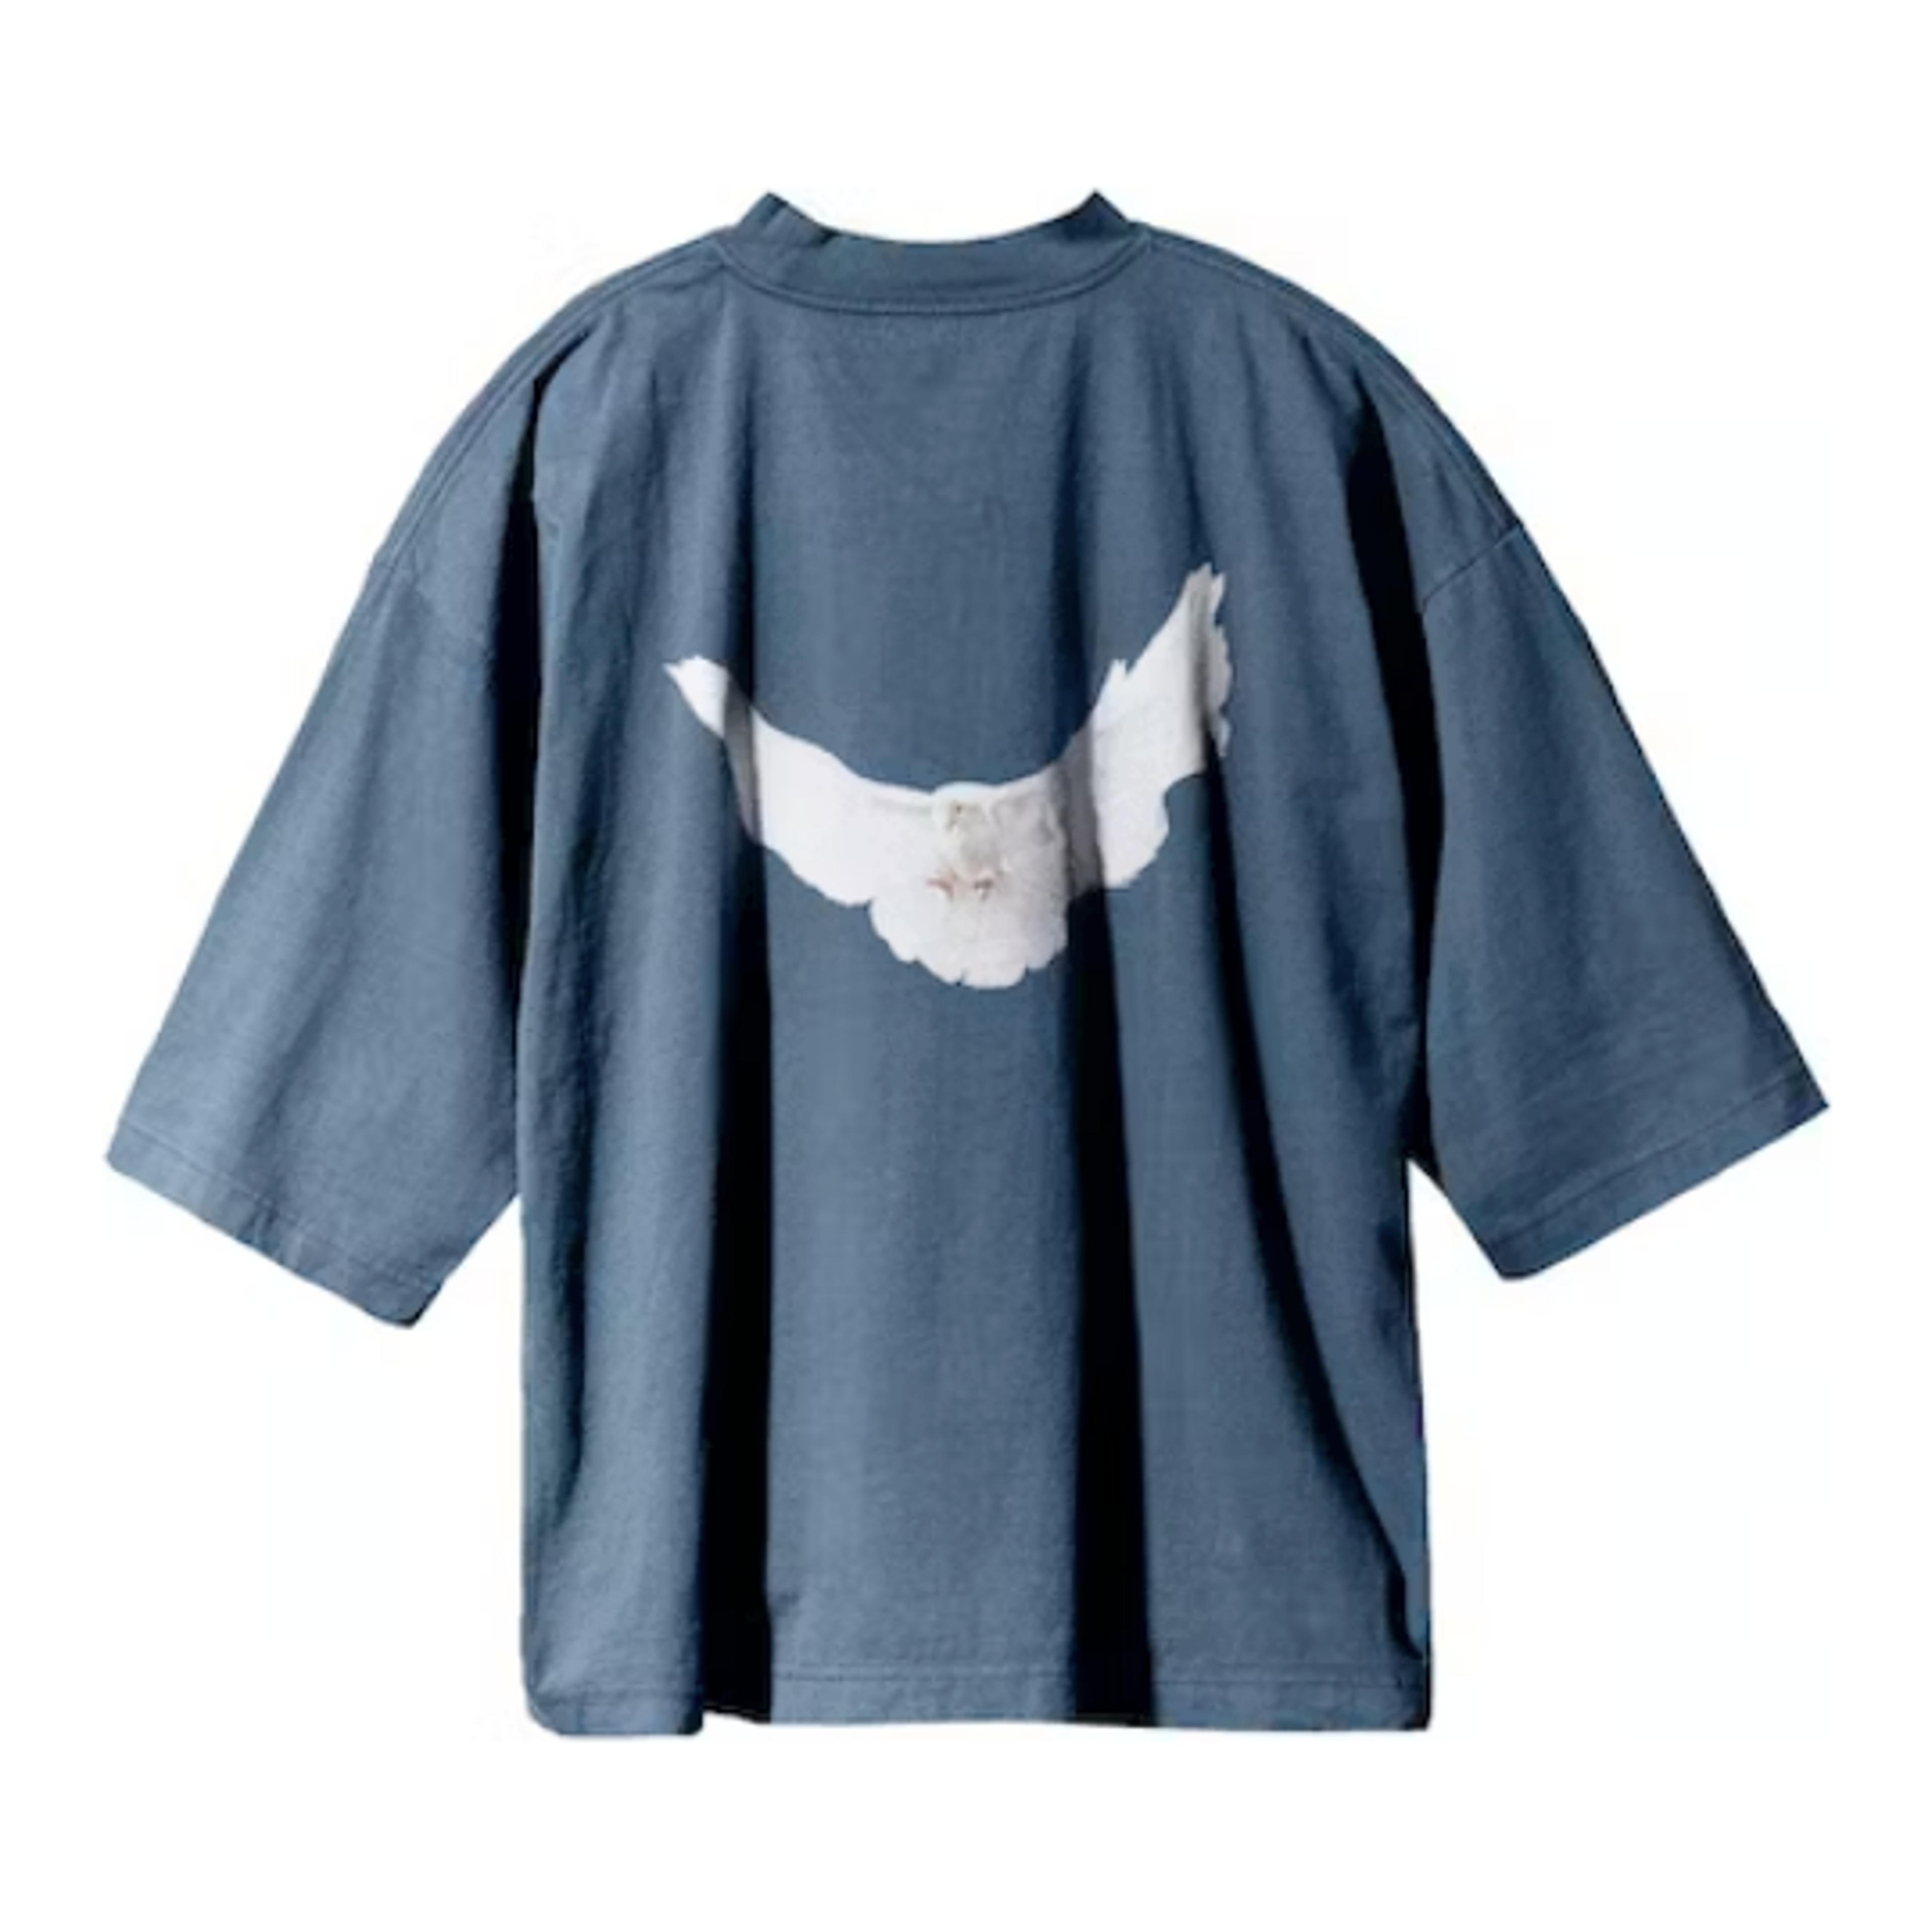 Alternate View 1 of Yeezy Gap Engineered by Balenciaga Dove 3/4 Sleeve T-shirt Blue